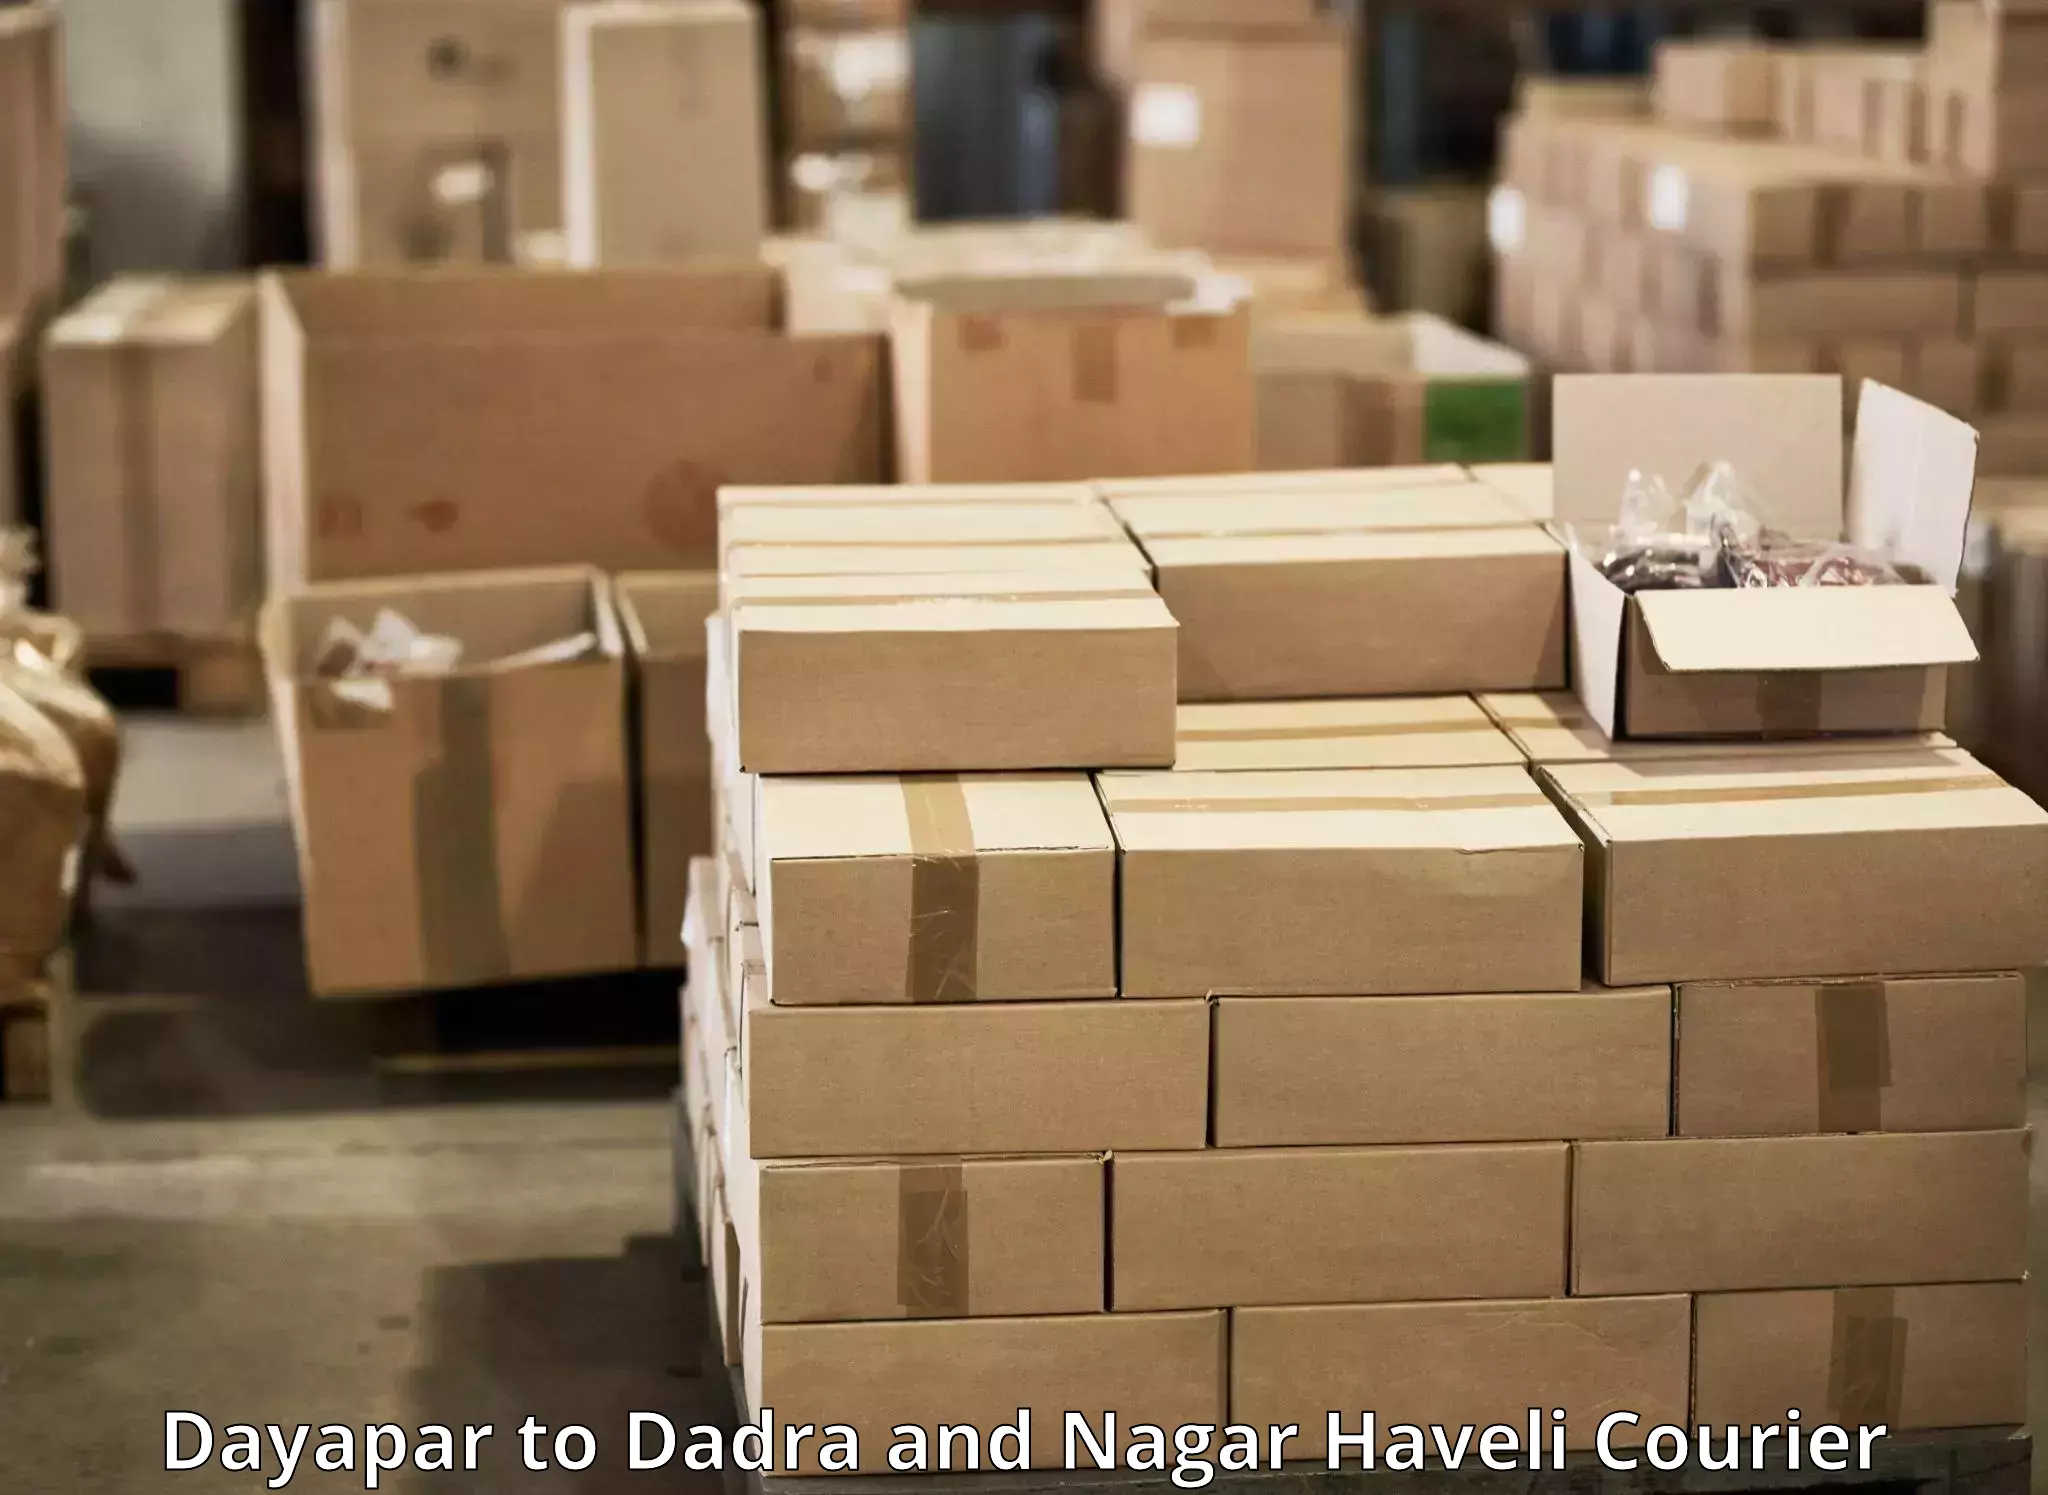 User-friendly delivery service Dayapar to Dadra and Nagar Haveli